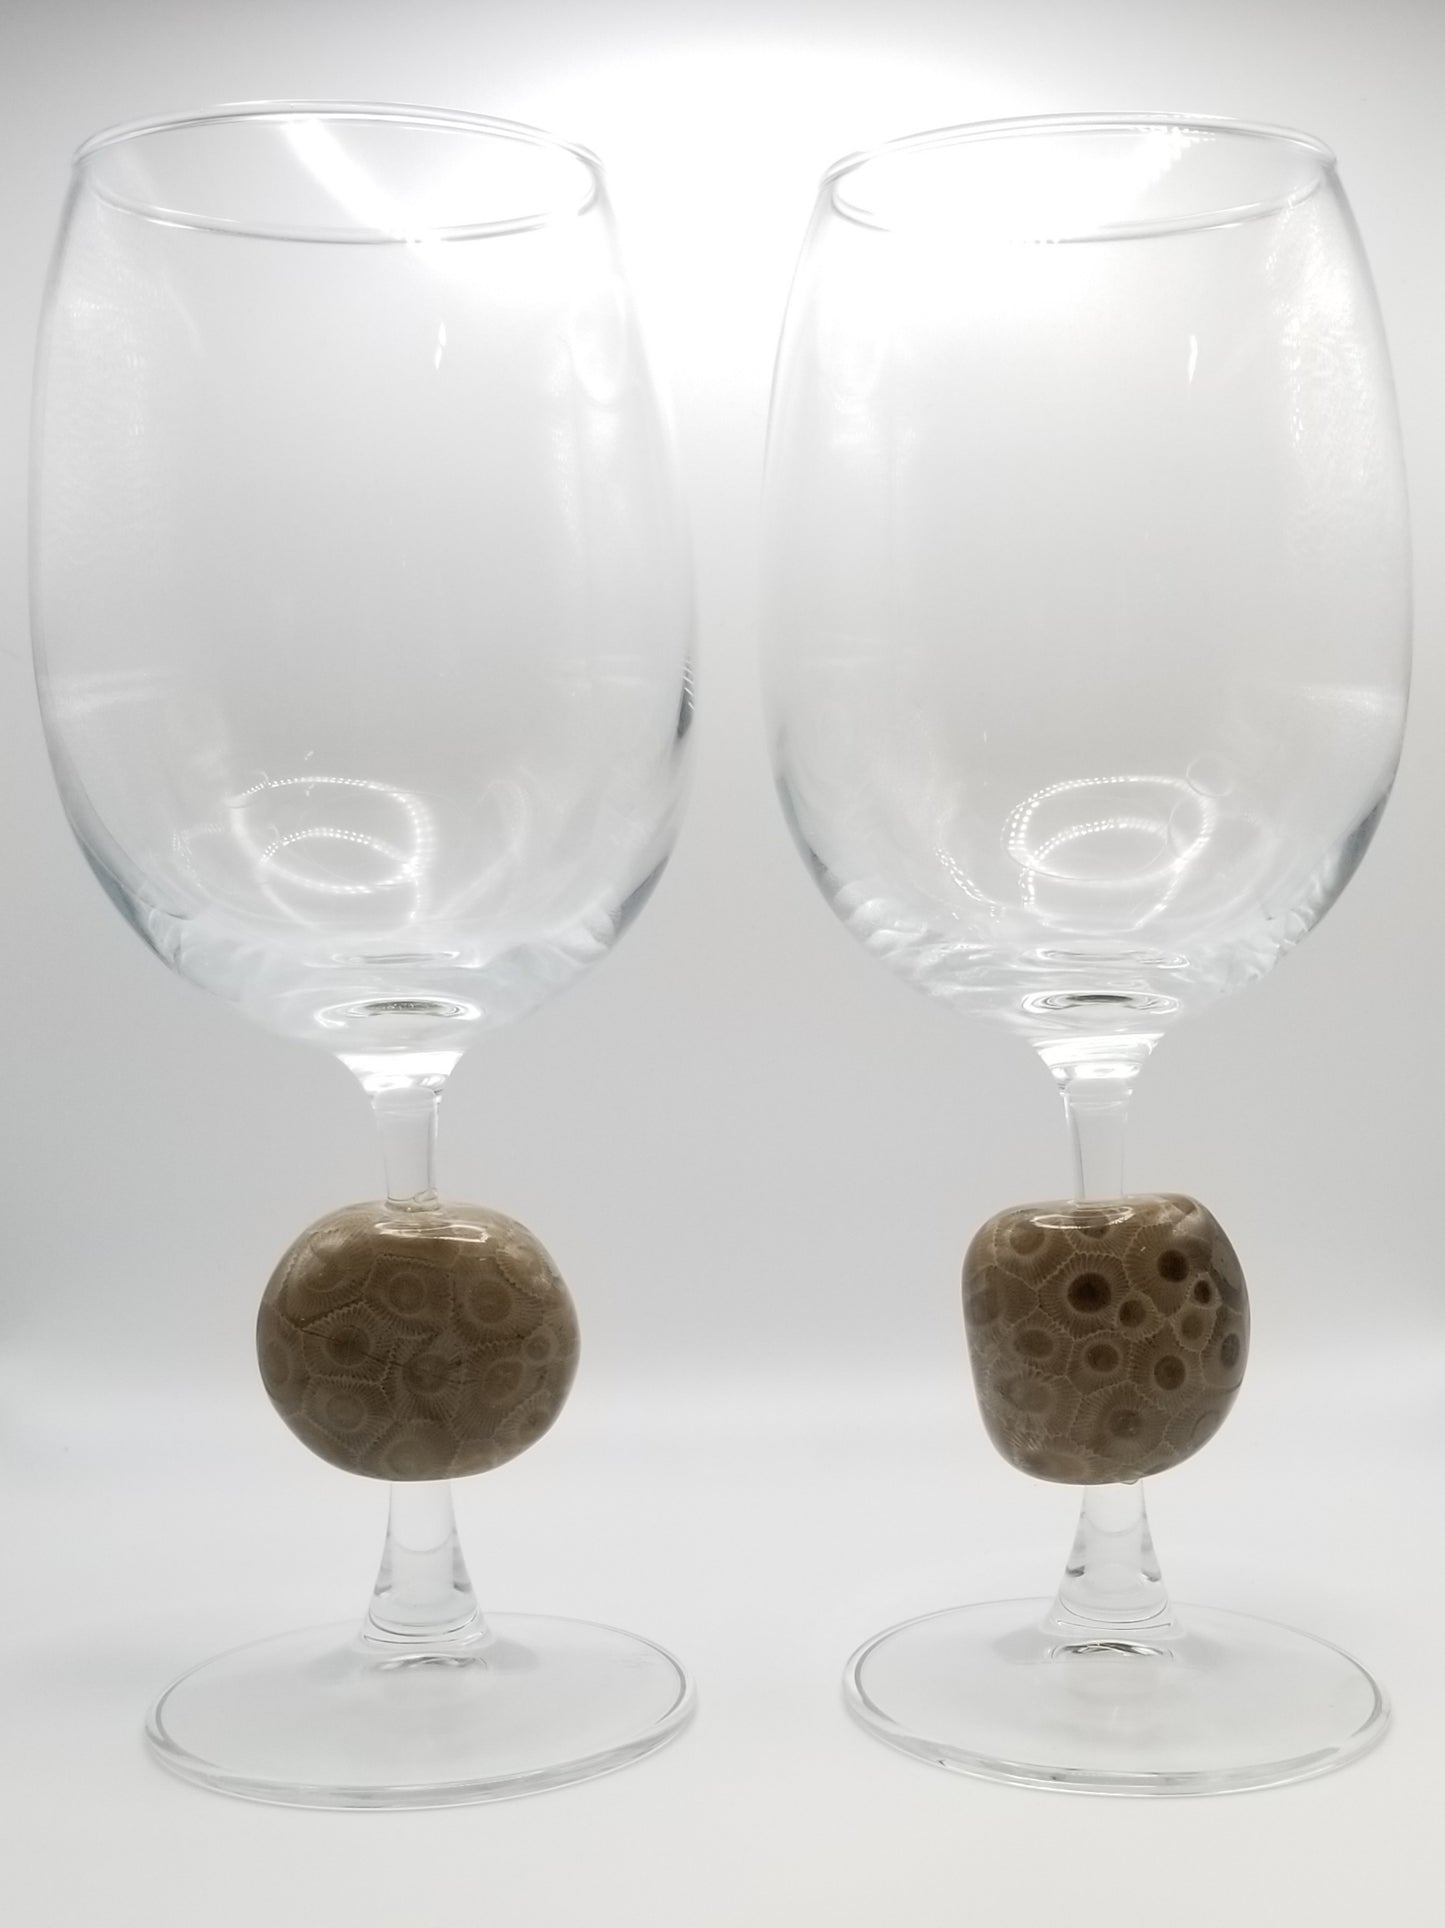 Petoskey Stone Wine Glasses